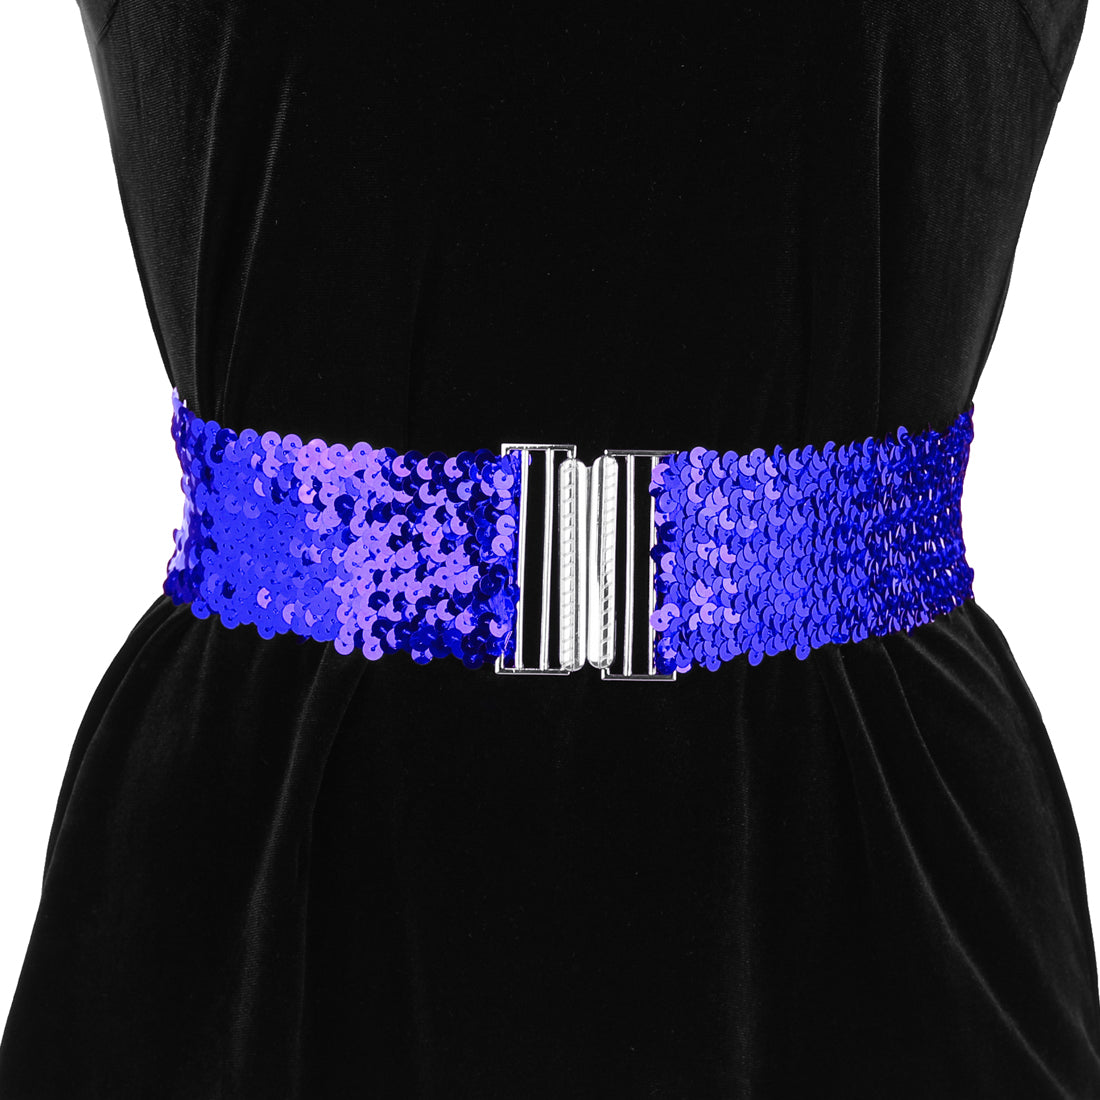 Allegra K Womens Stretchy Waist Belts Metal Interlock Buckles Sequins Decor Belts for Dresses